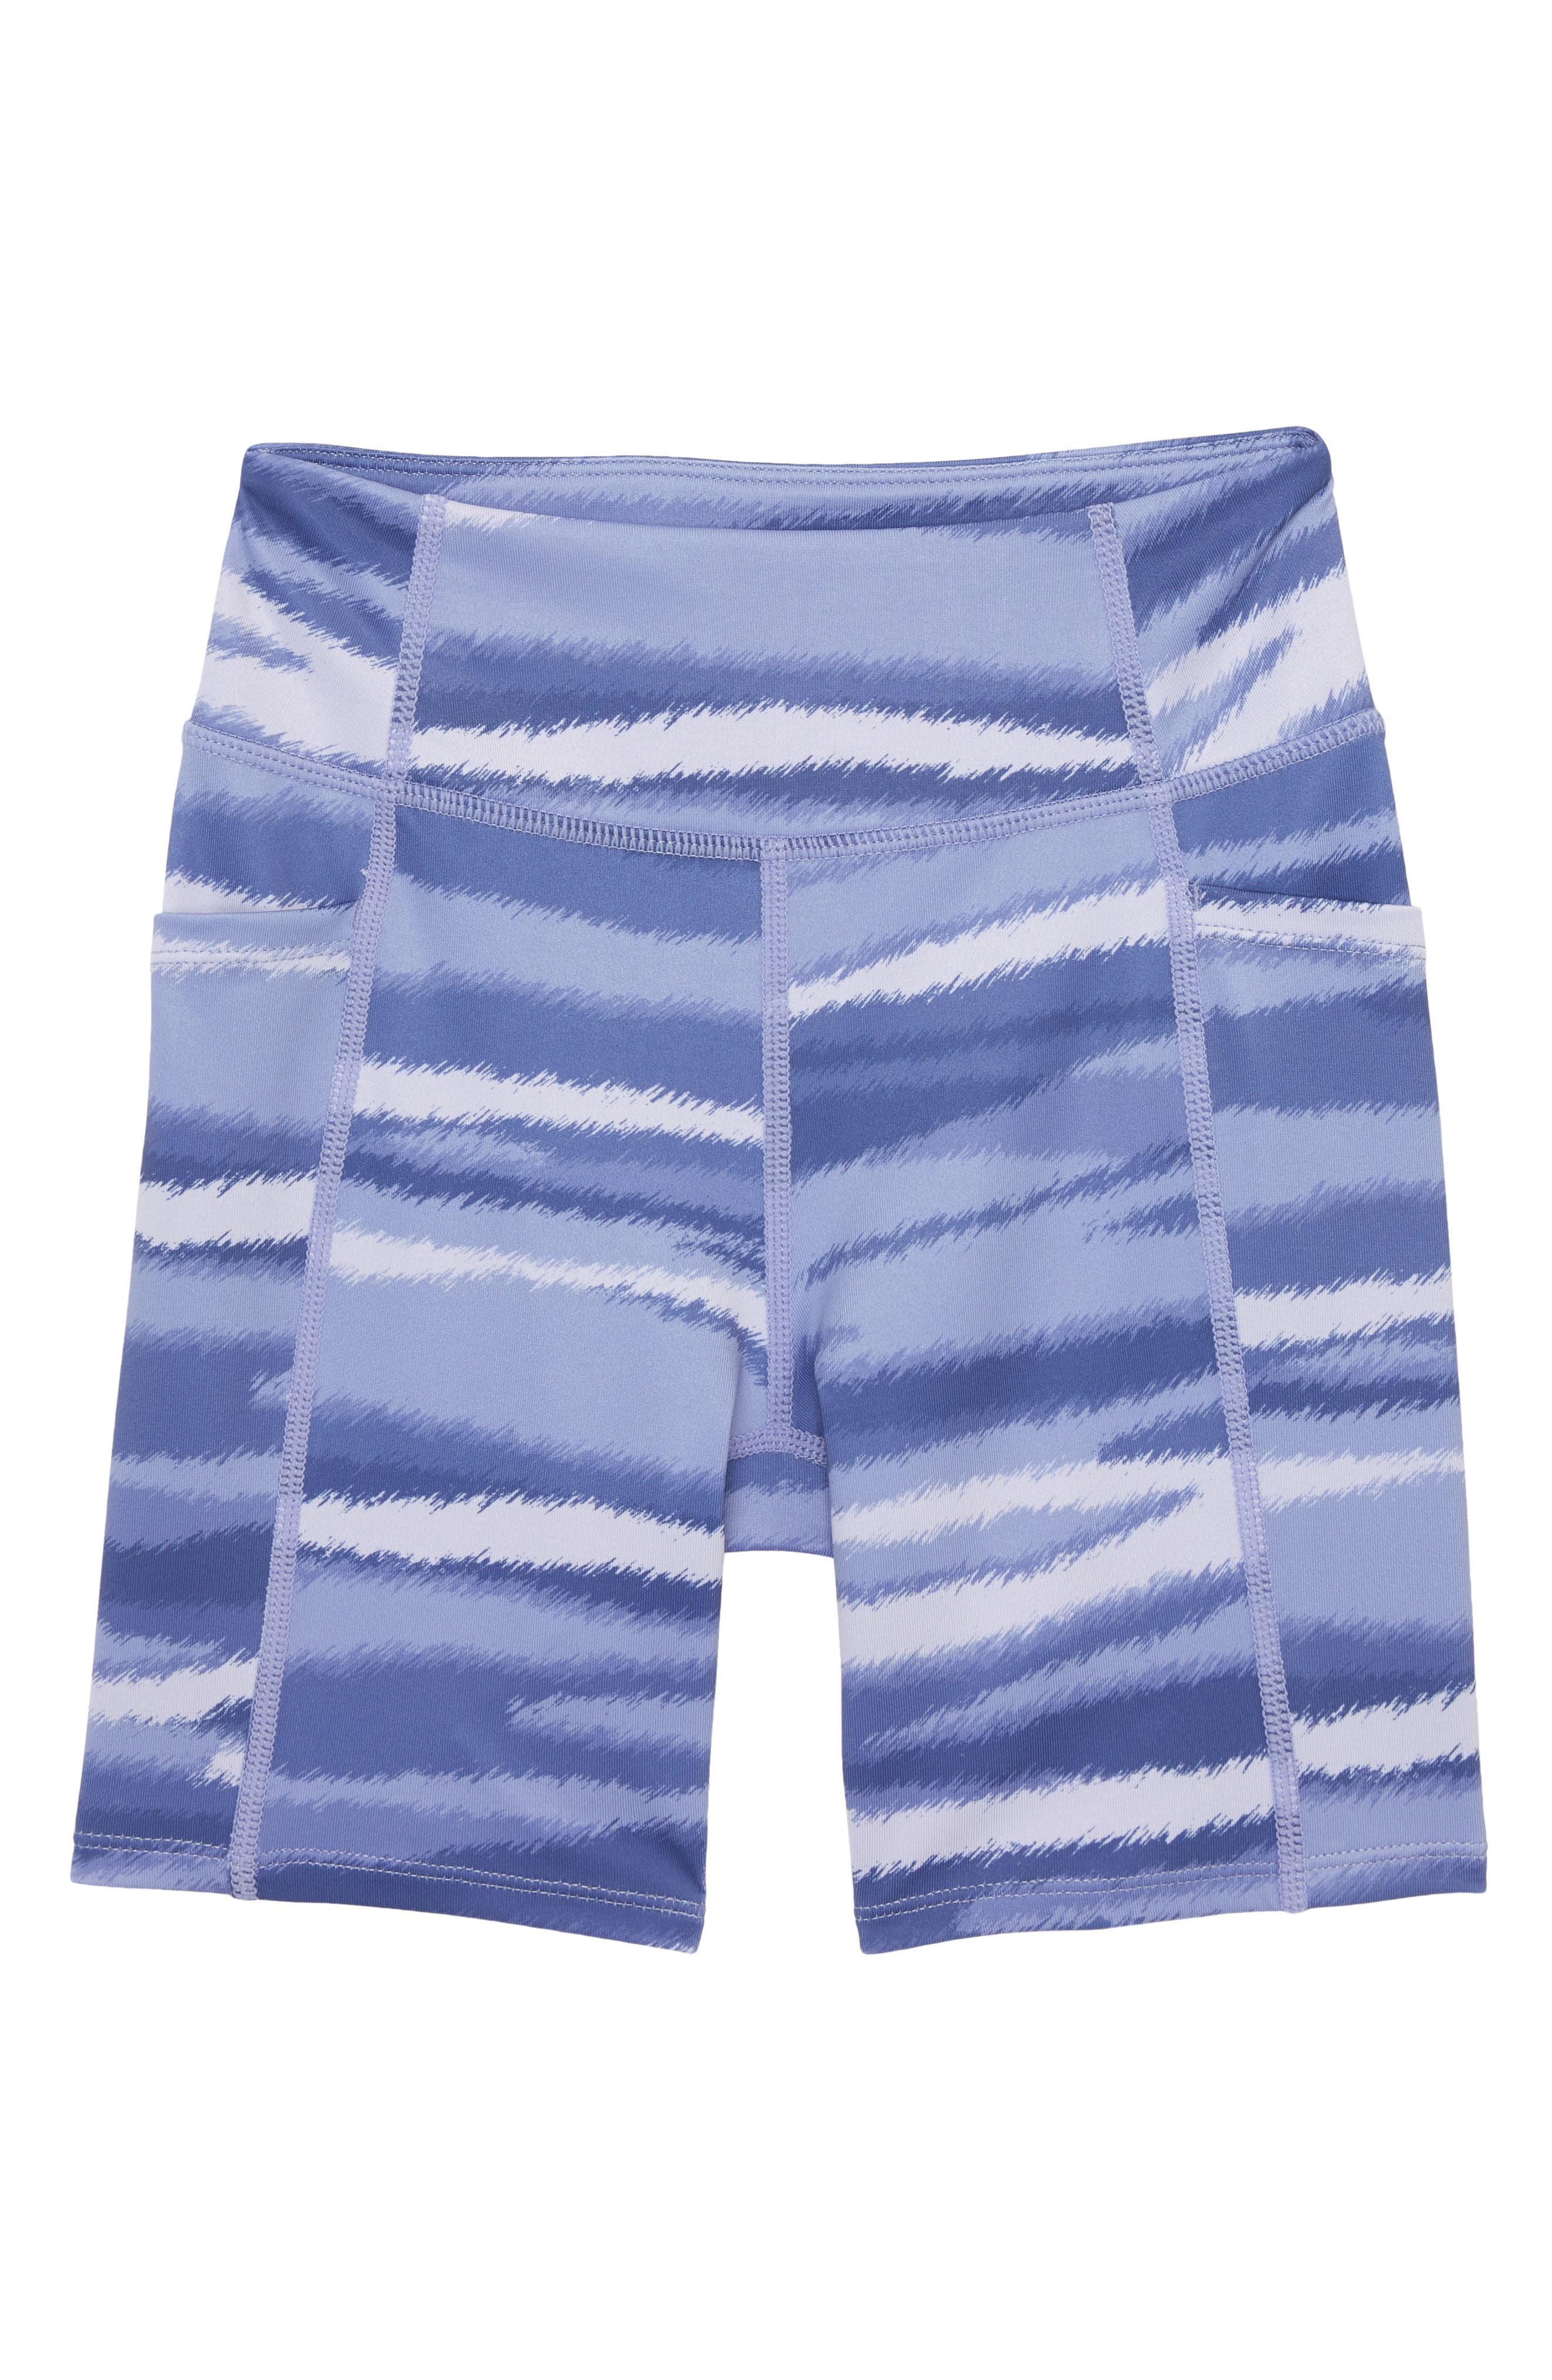 Blue Cotton Shorts Newborn charity item  **Free p&p**